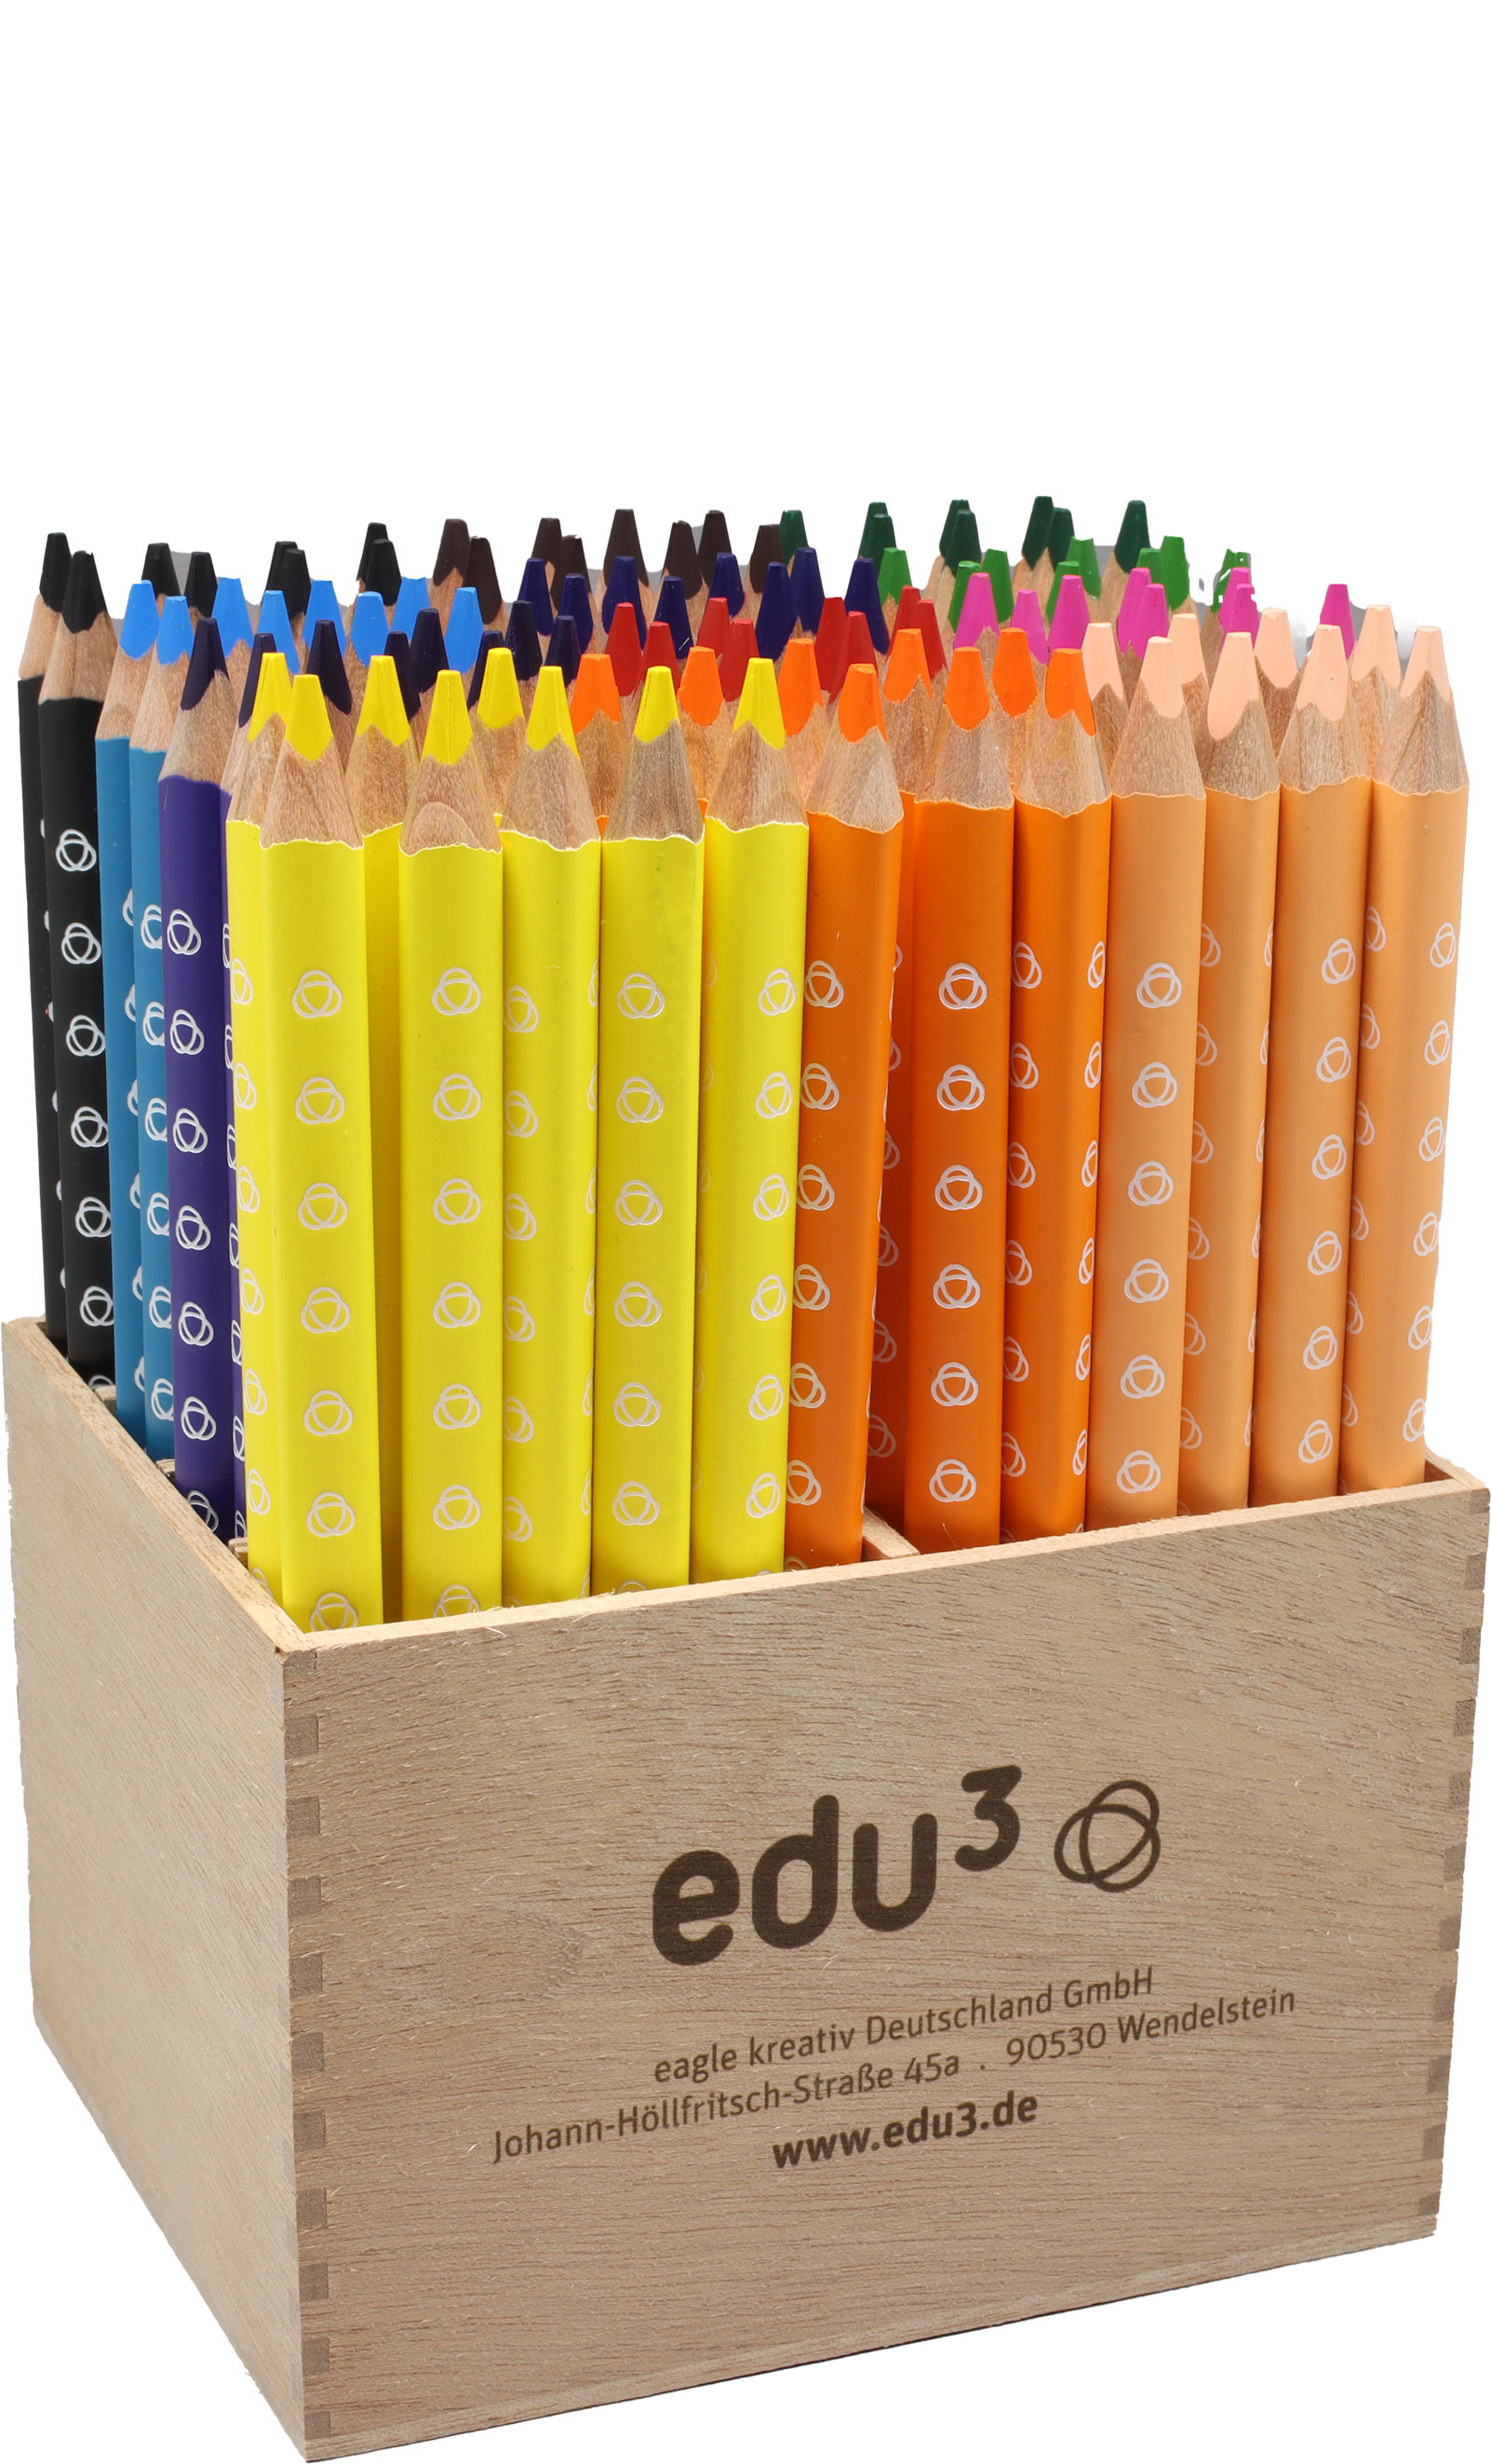 edu³ Jumbo colored pencil tri wooden display